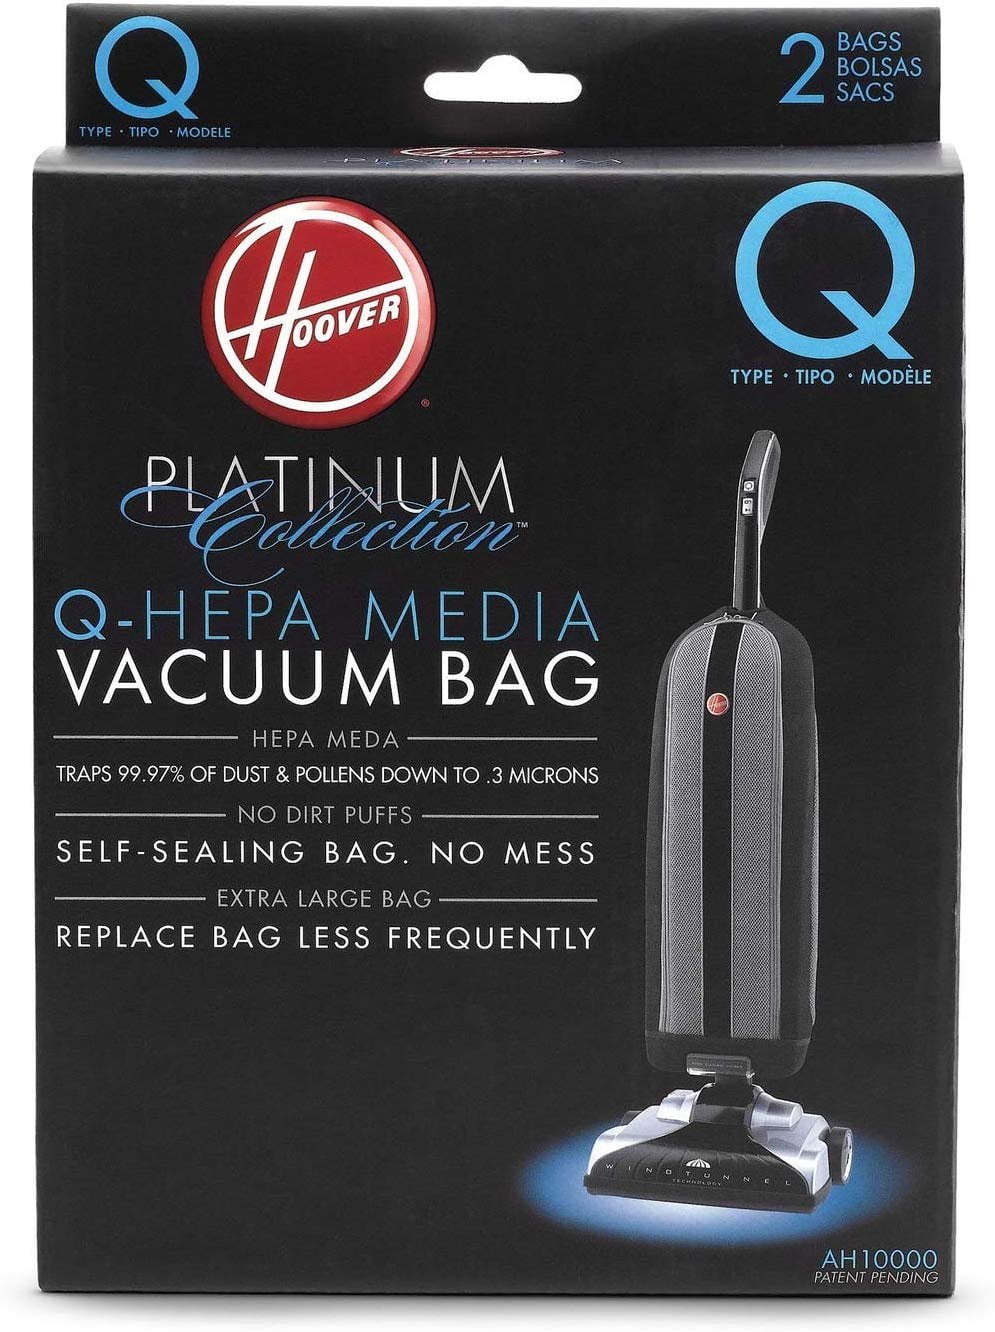 2 Vacuum Bags for Hoover Platinum Type I HEPA 